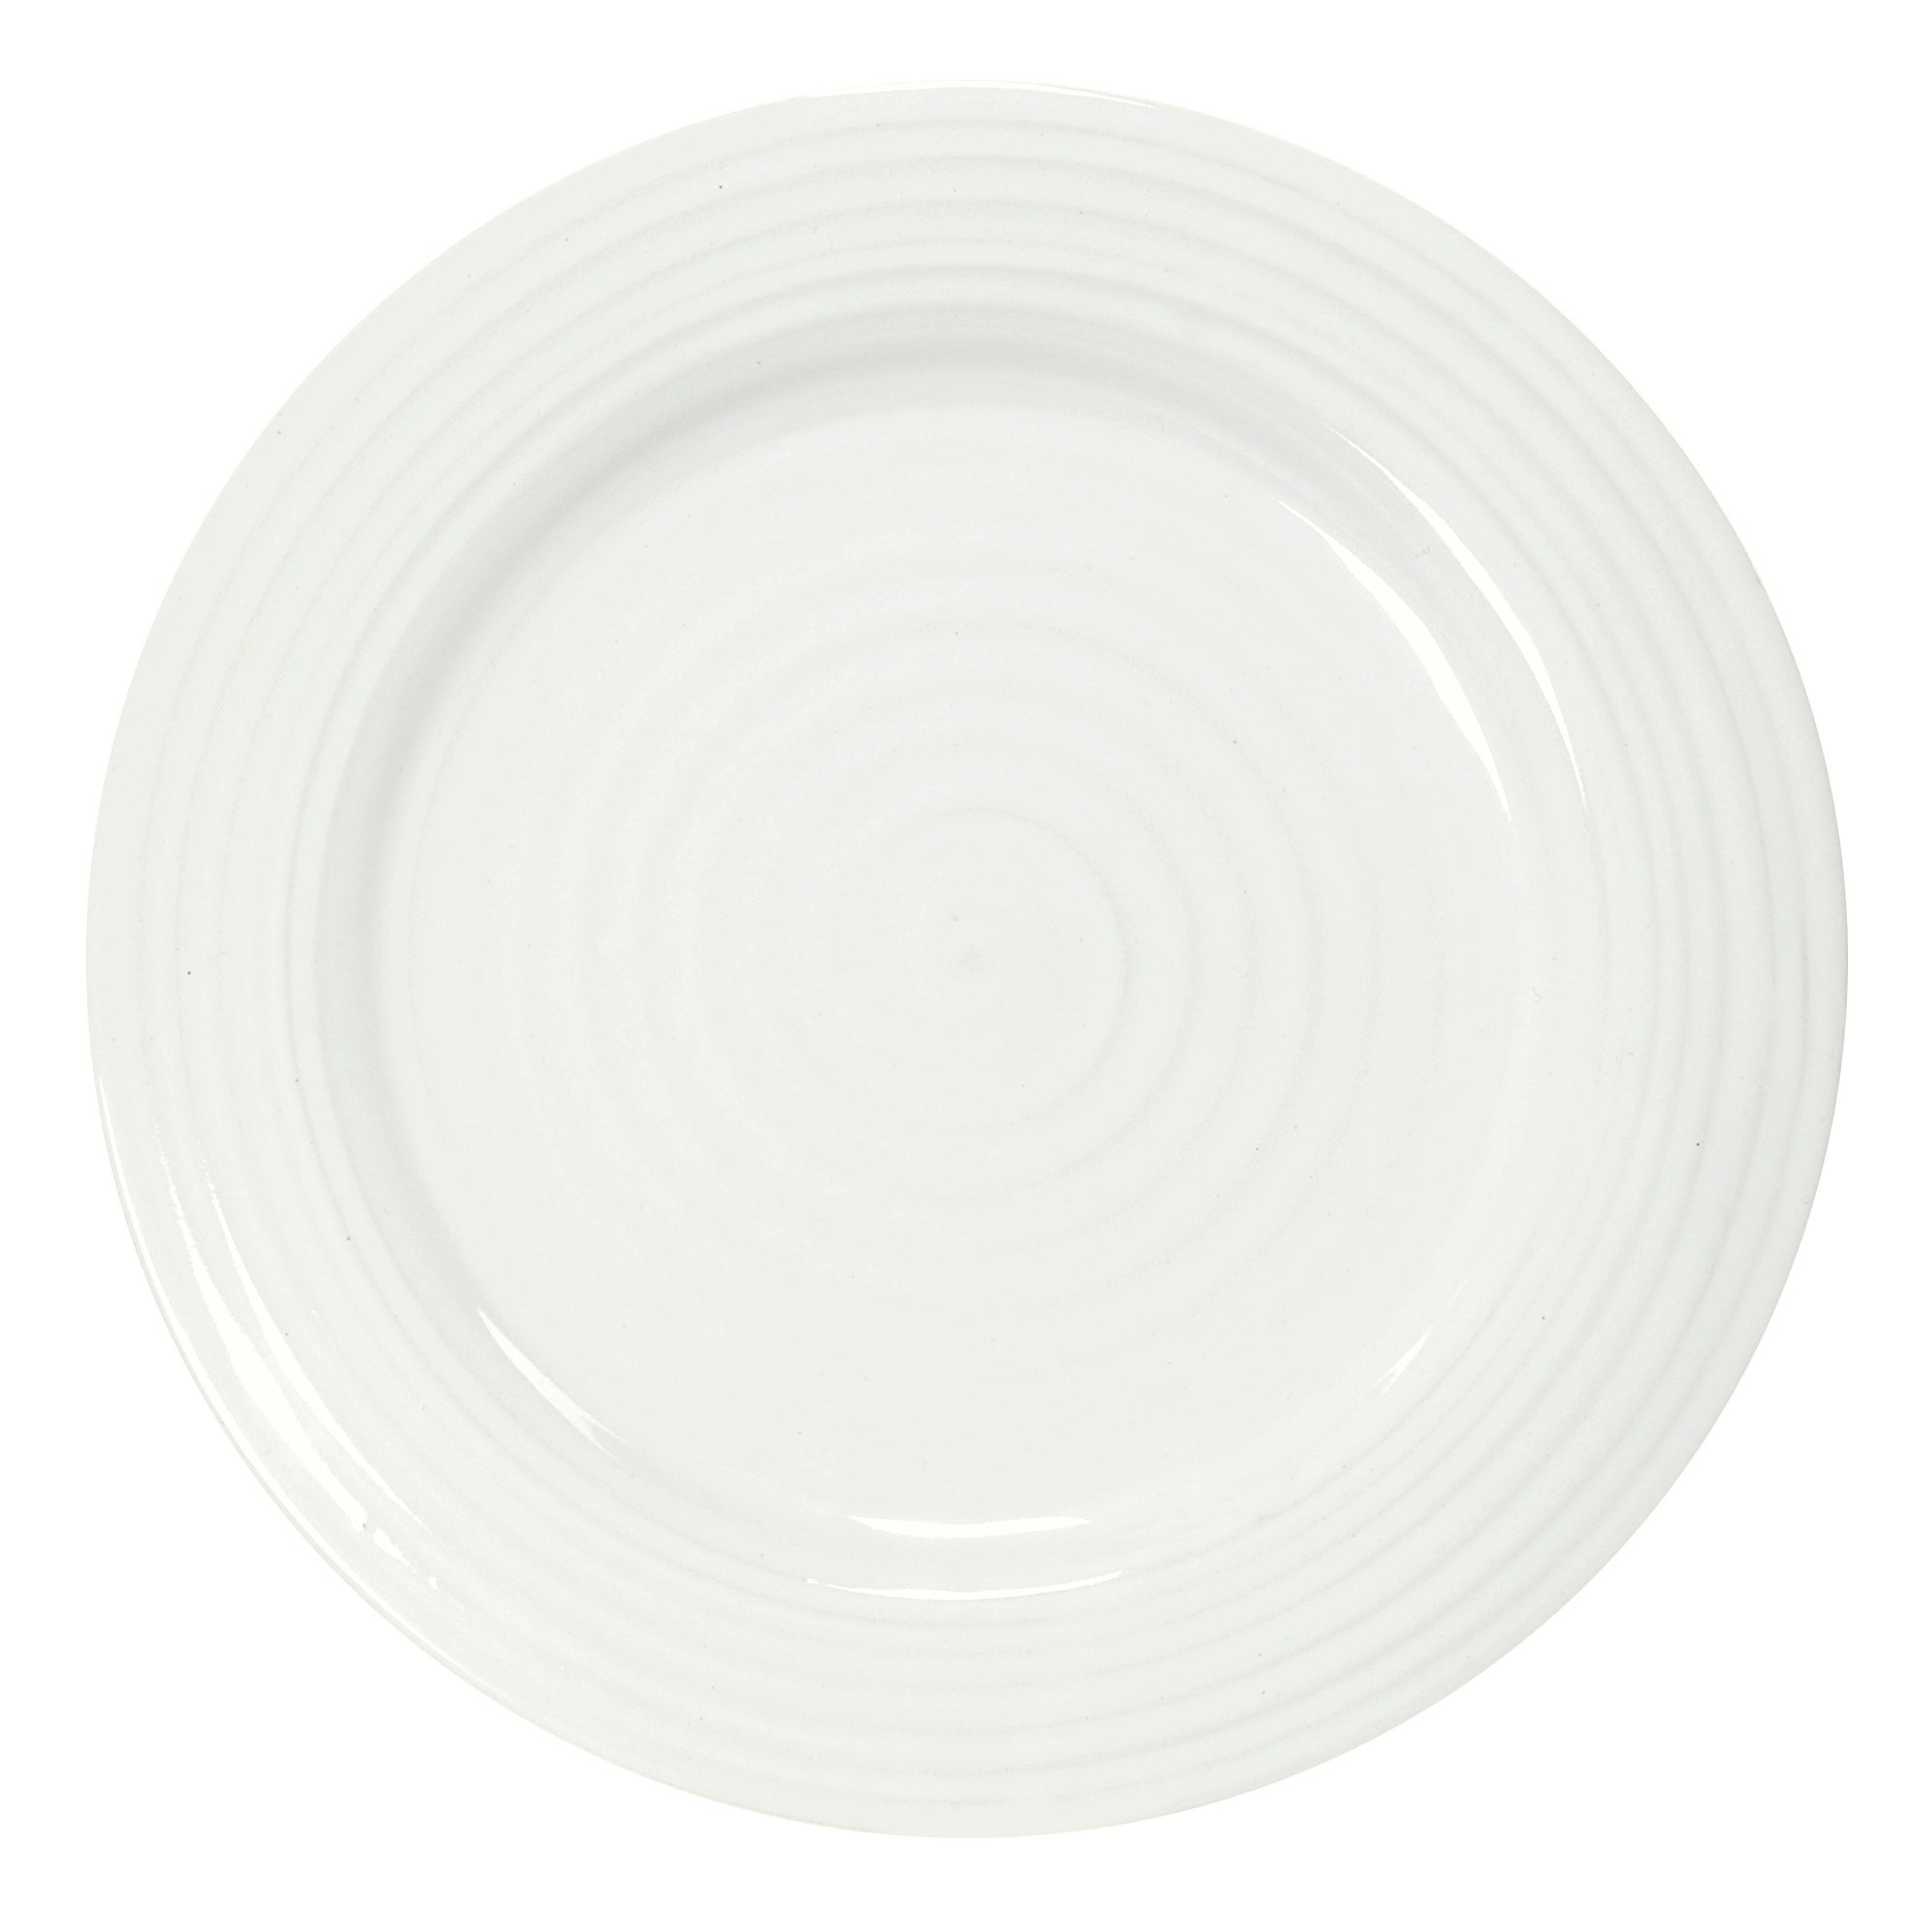 Sophie Conran for Portmeirion Set of 4 Dinner Plates White